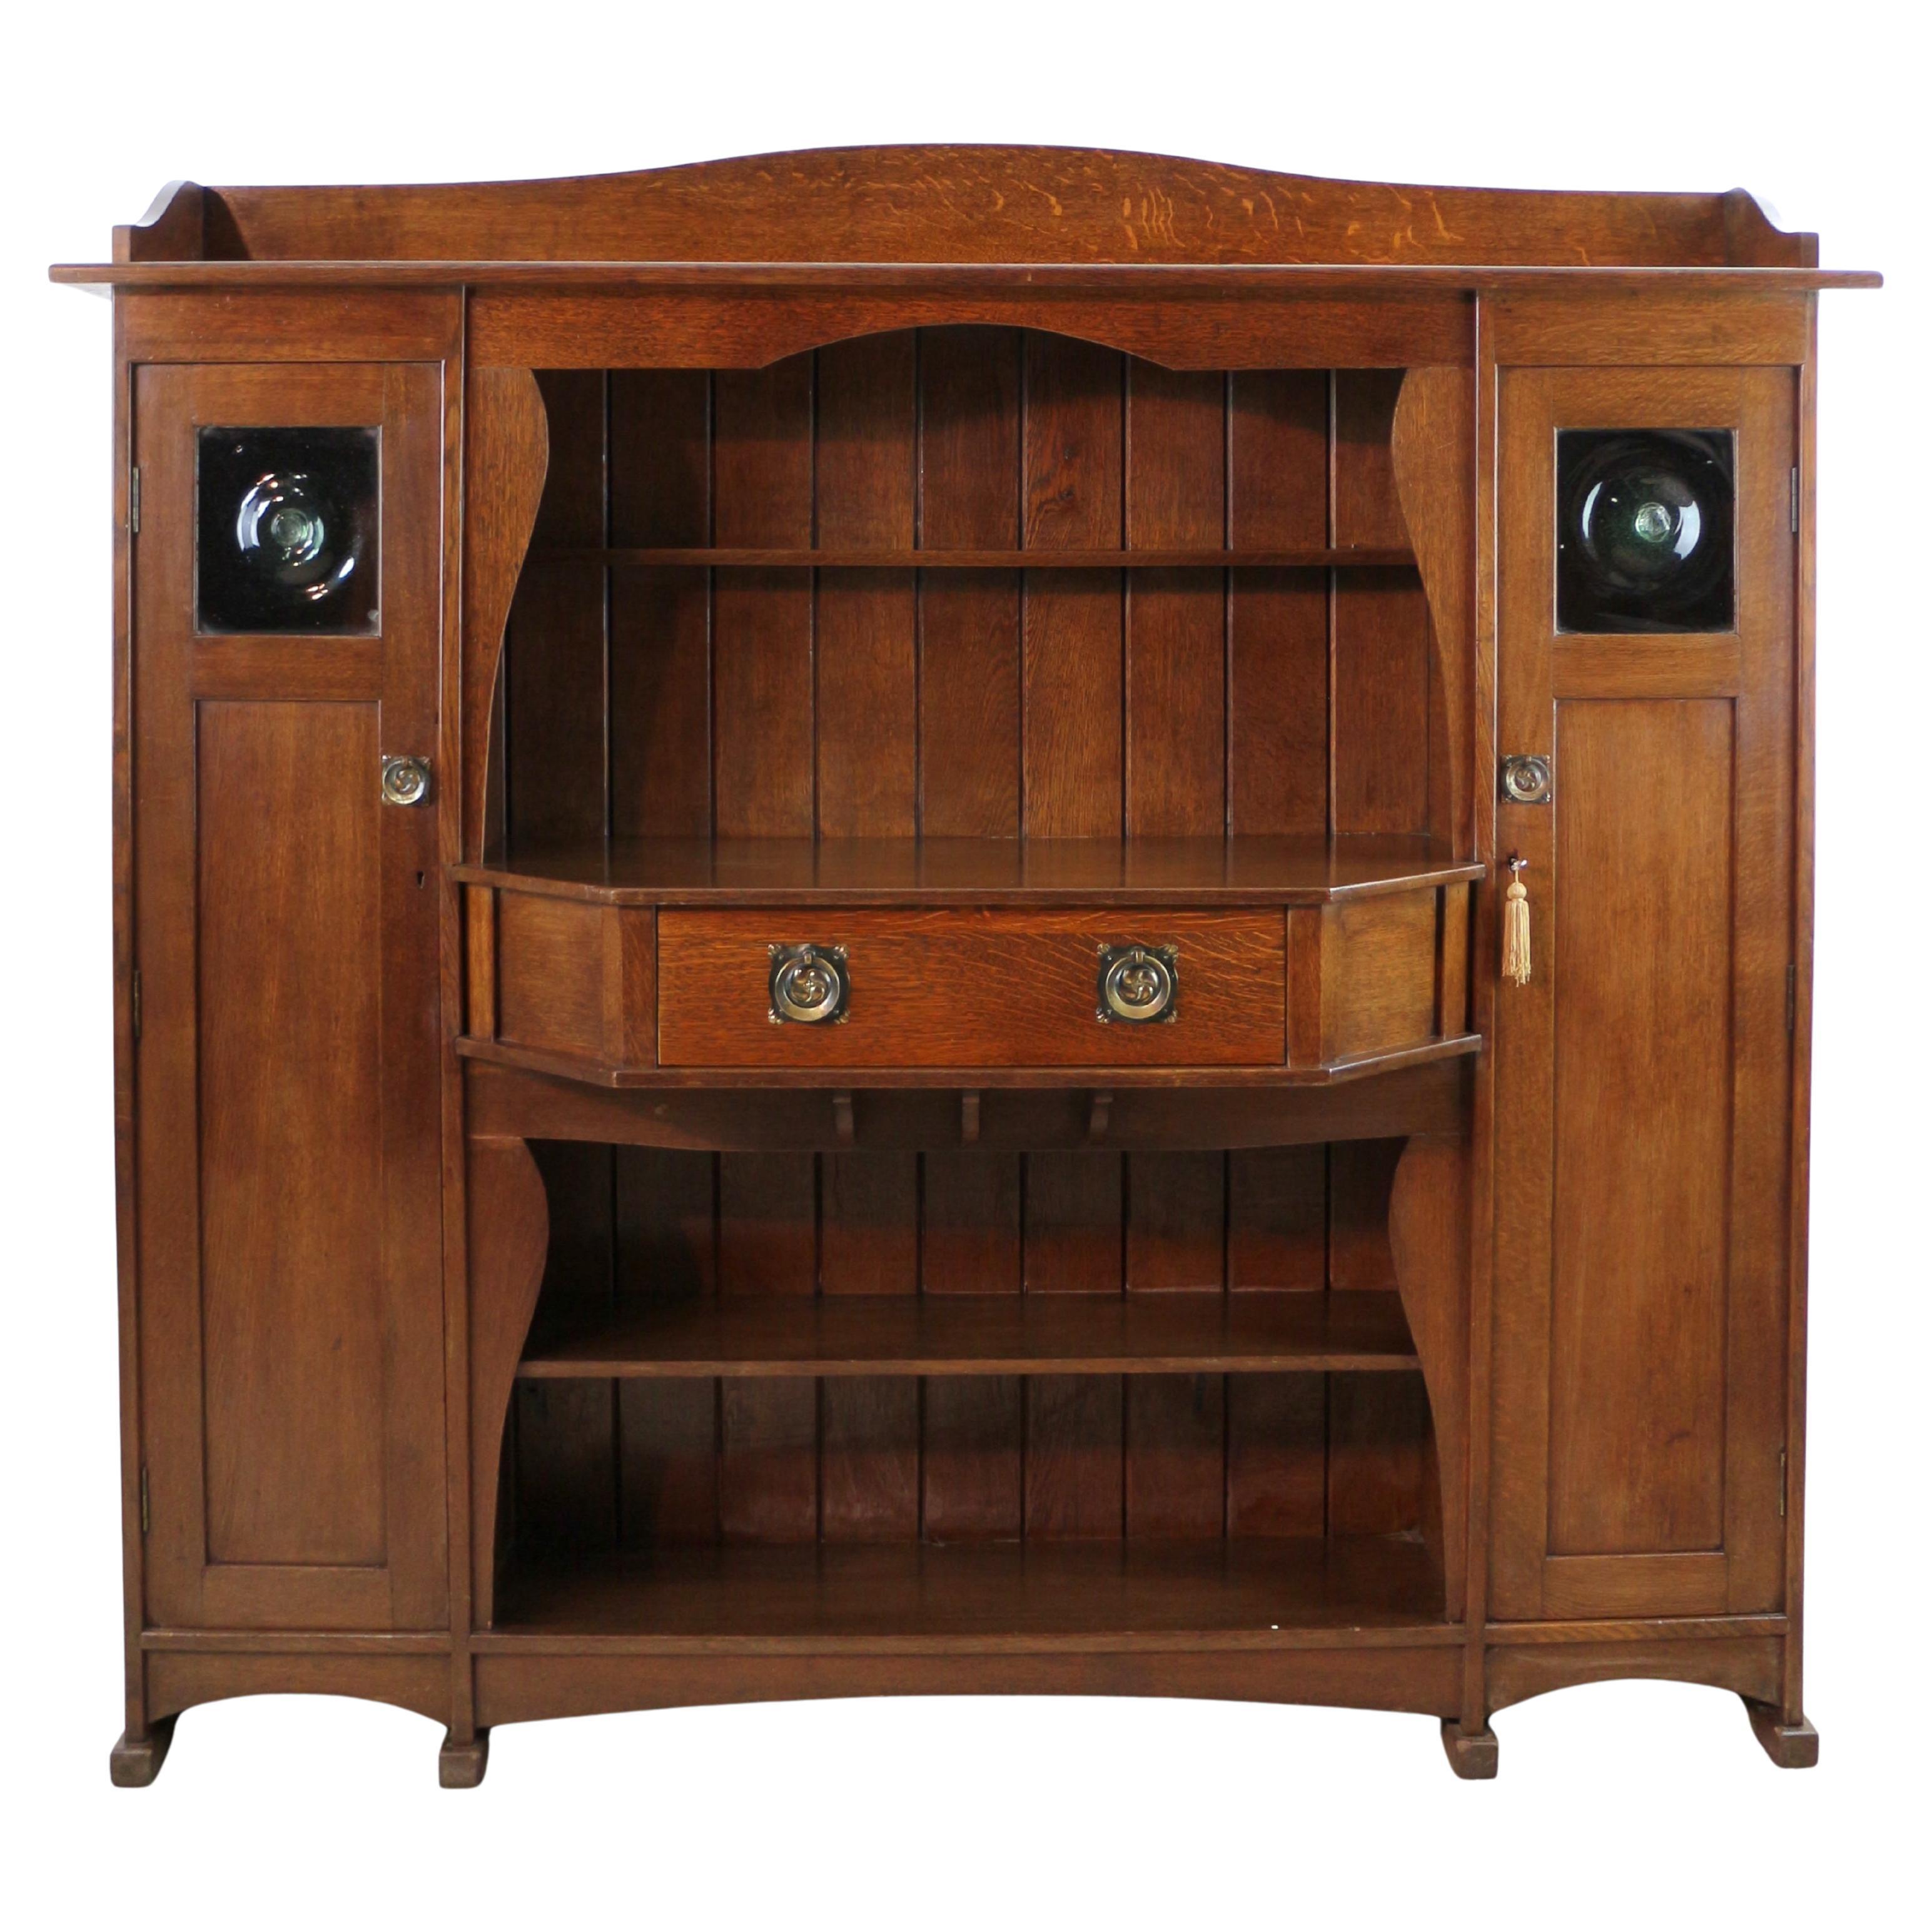 Antique English Liberty & Co Arts & Crafts Oak Hathaway Sideboard or Dresser